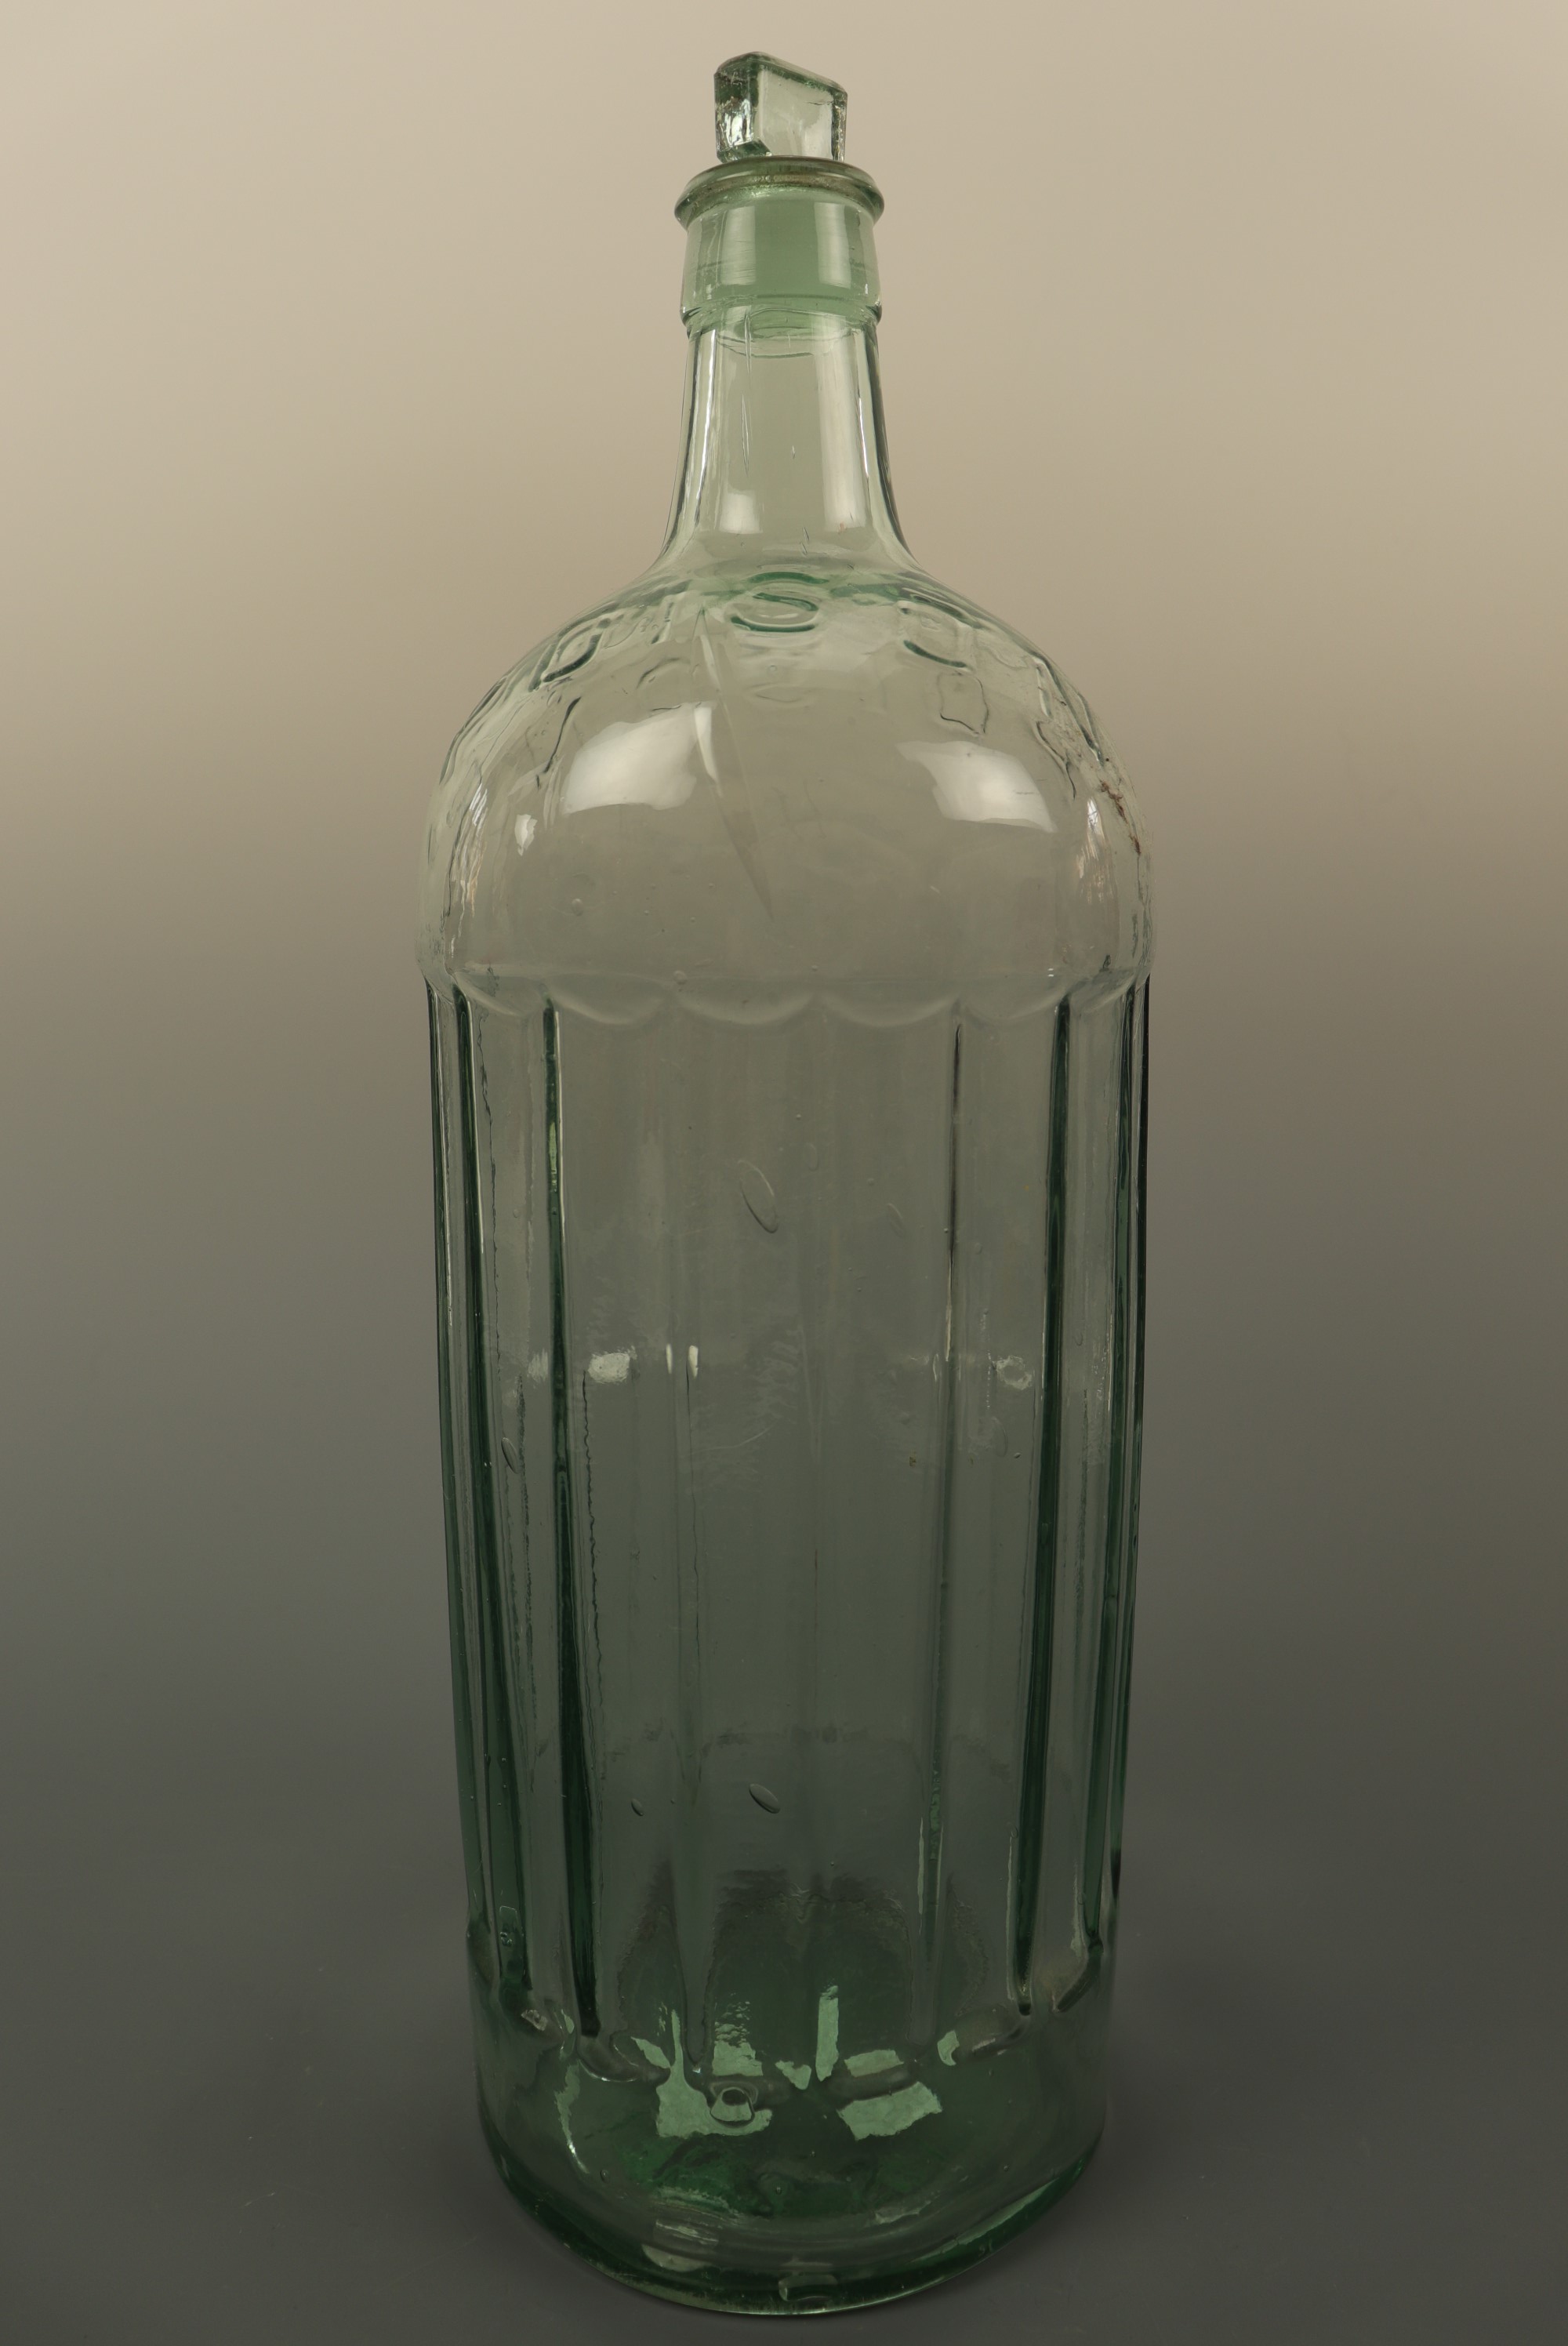 A vintage glass poison bottle, 38 cm high